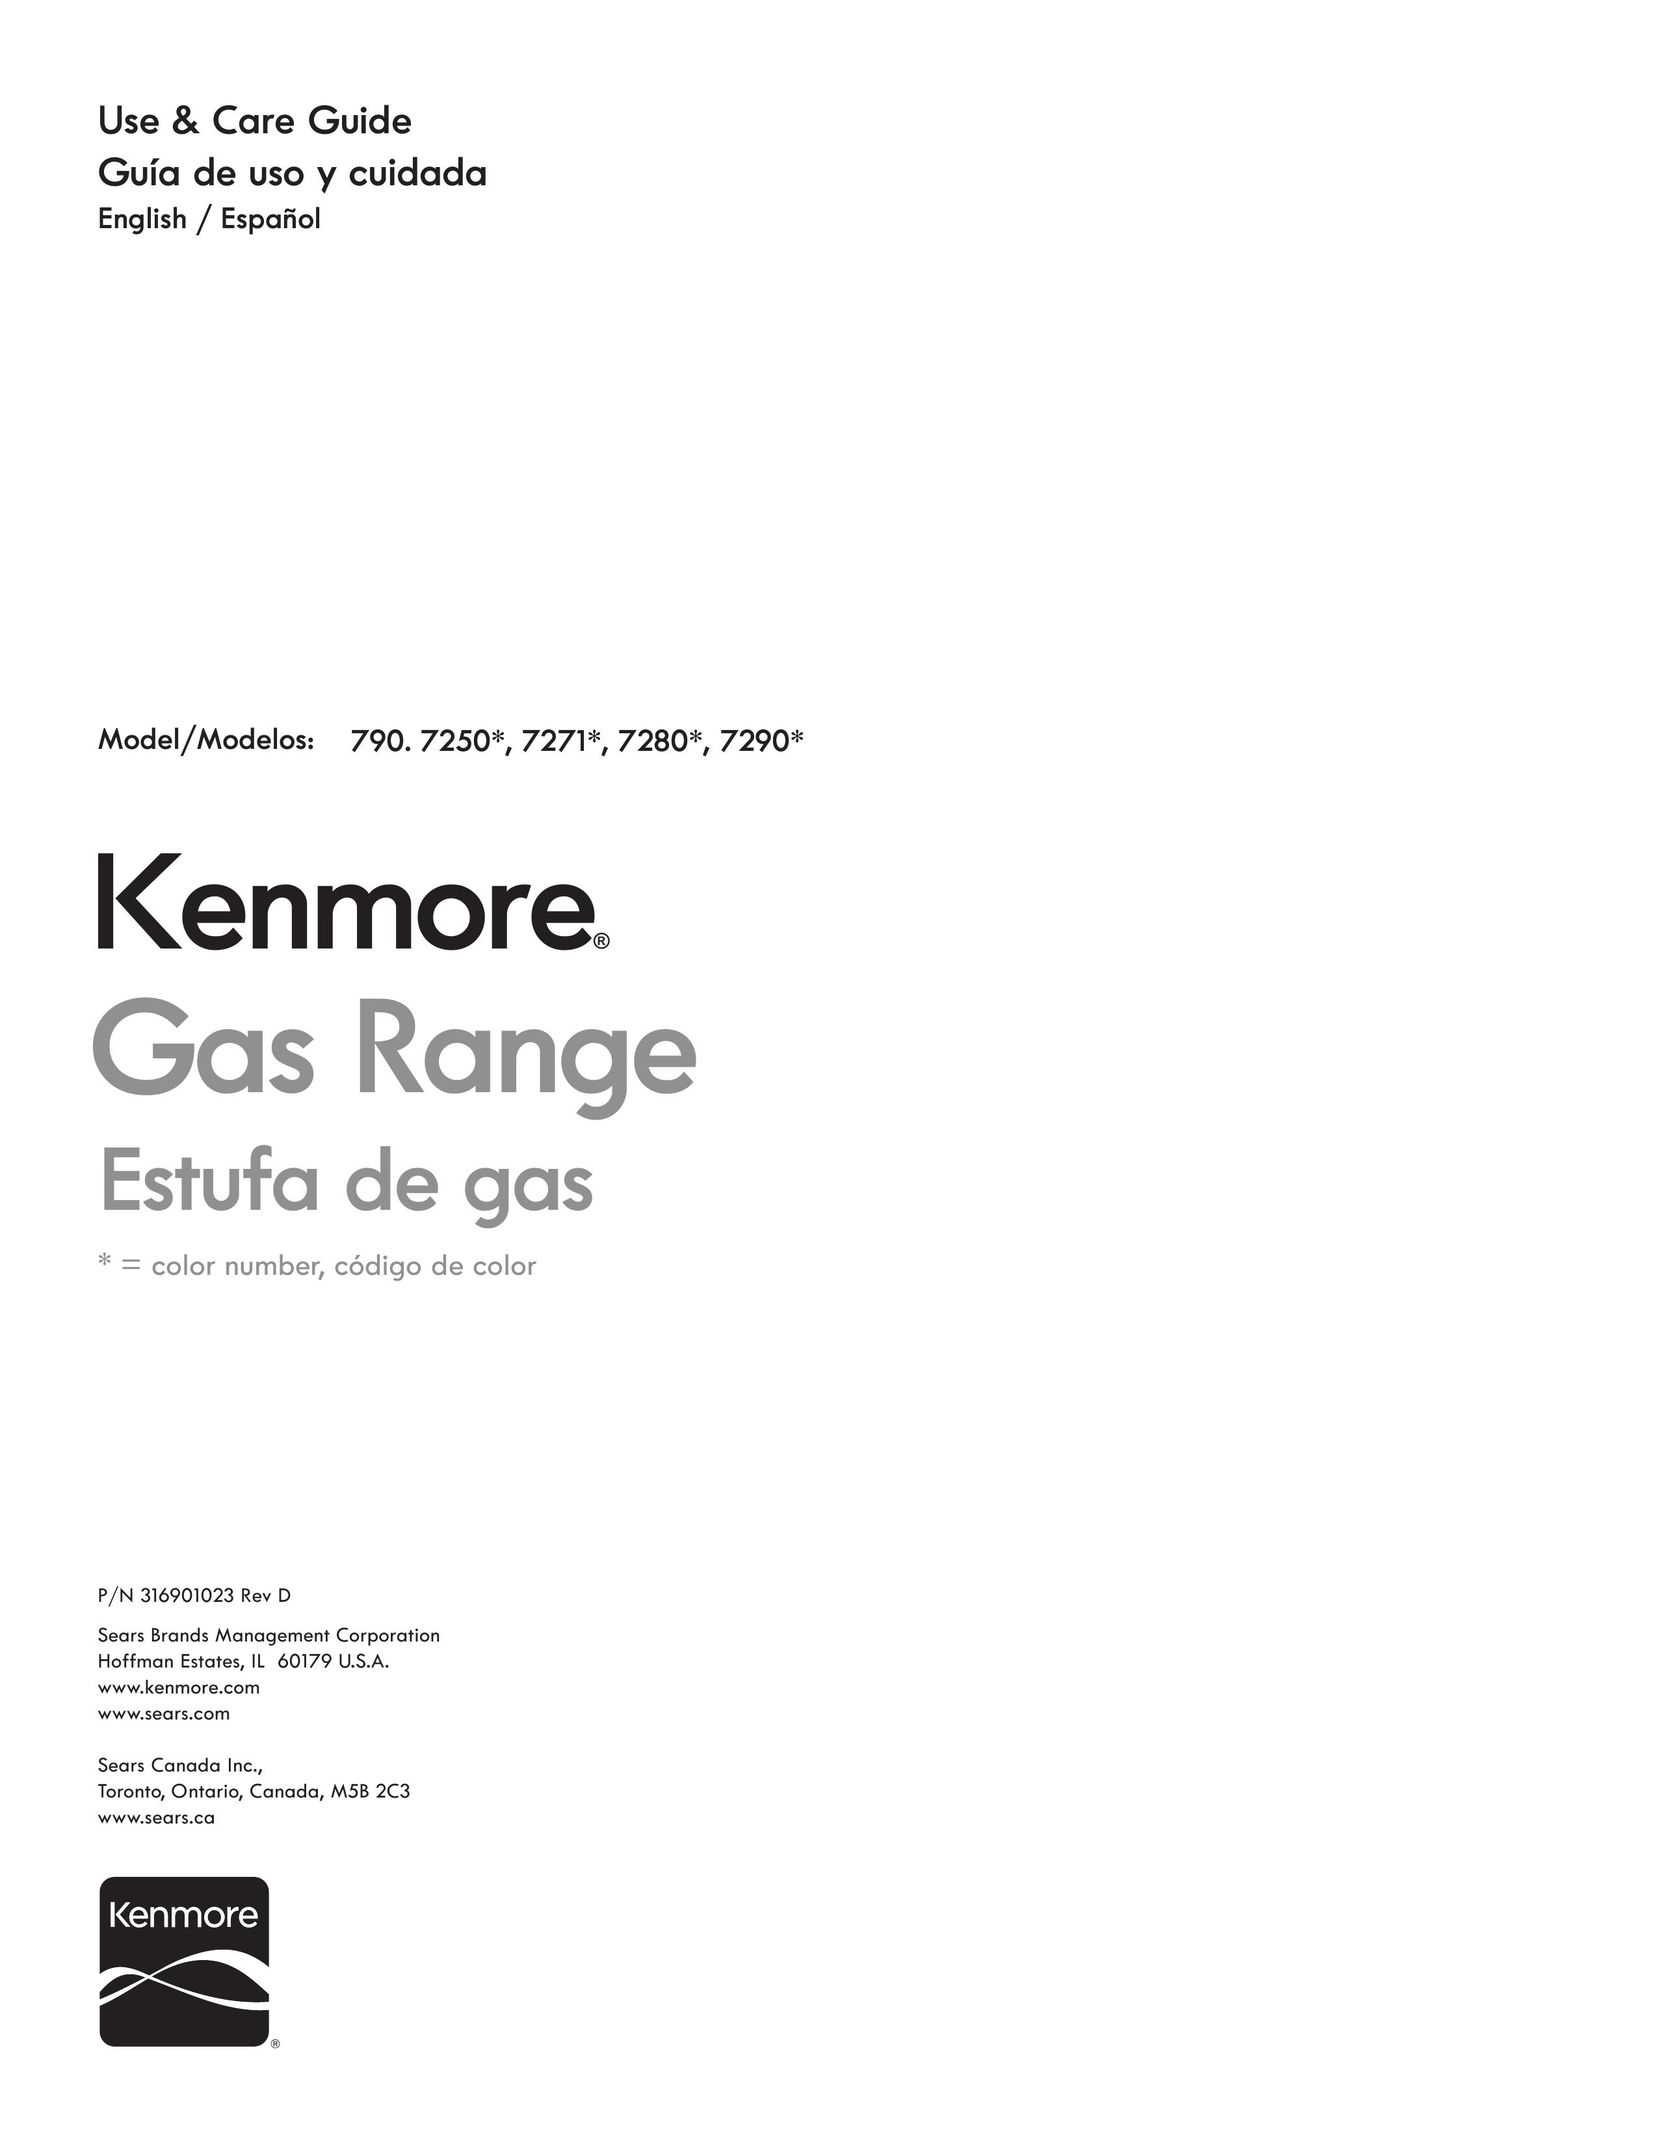 Kenmore 7280 Range User Manual